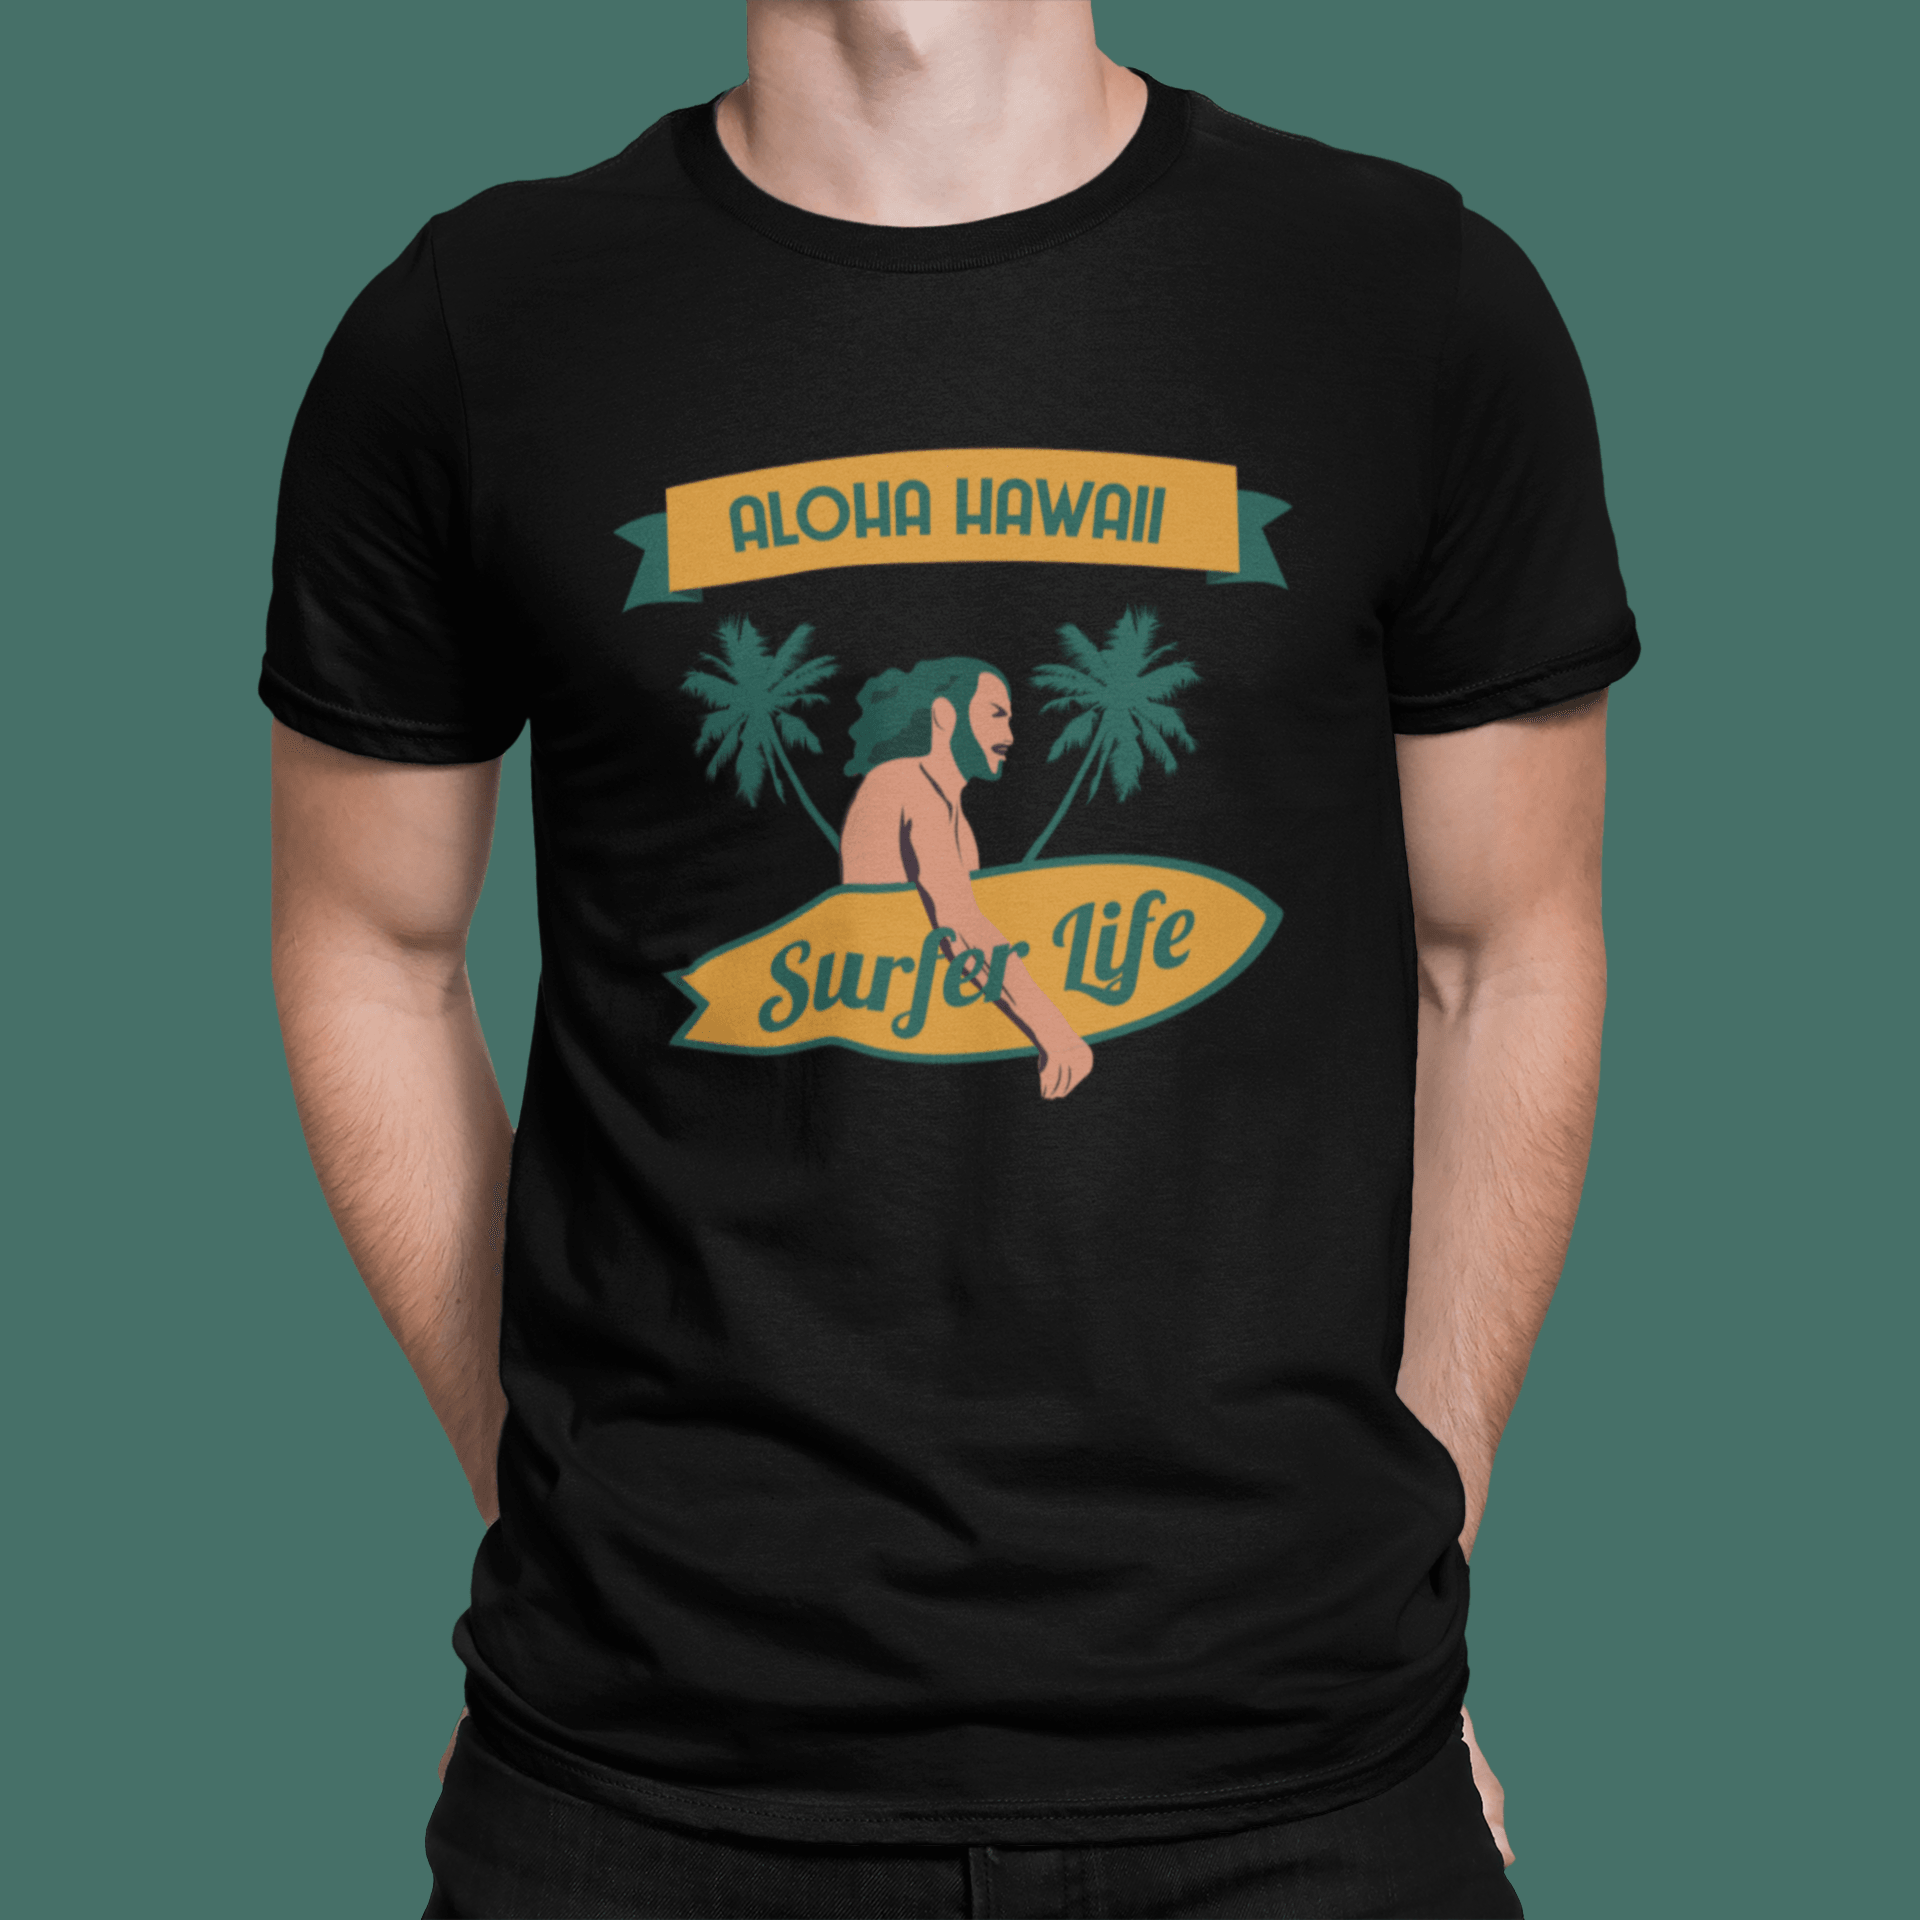 Aloha Hawaii Surfer Life Black T-Shirt For Men - ATOM